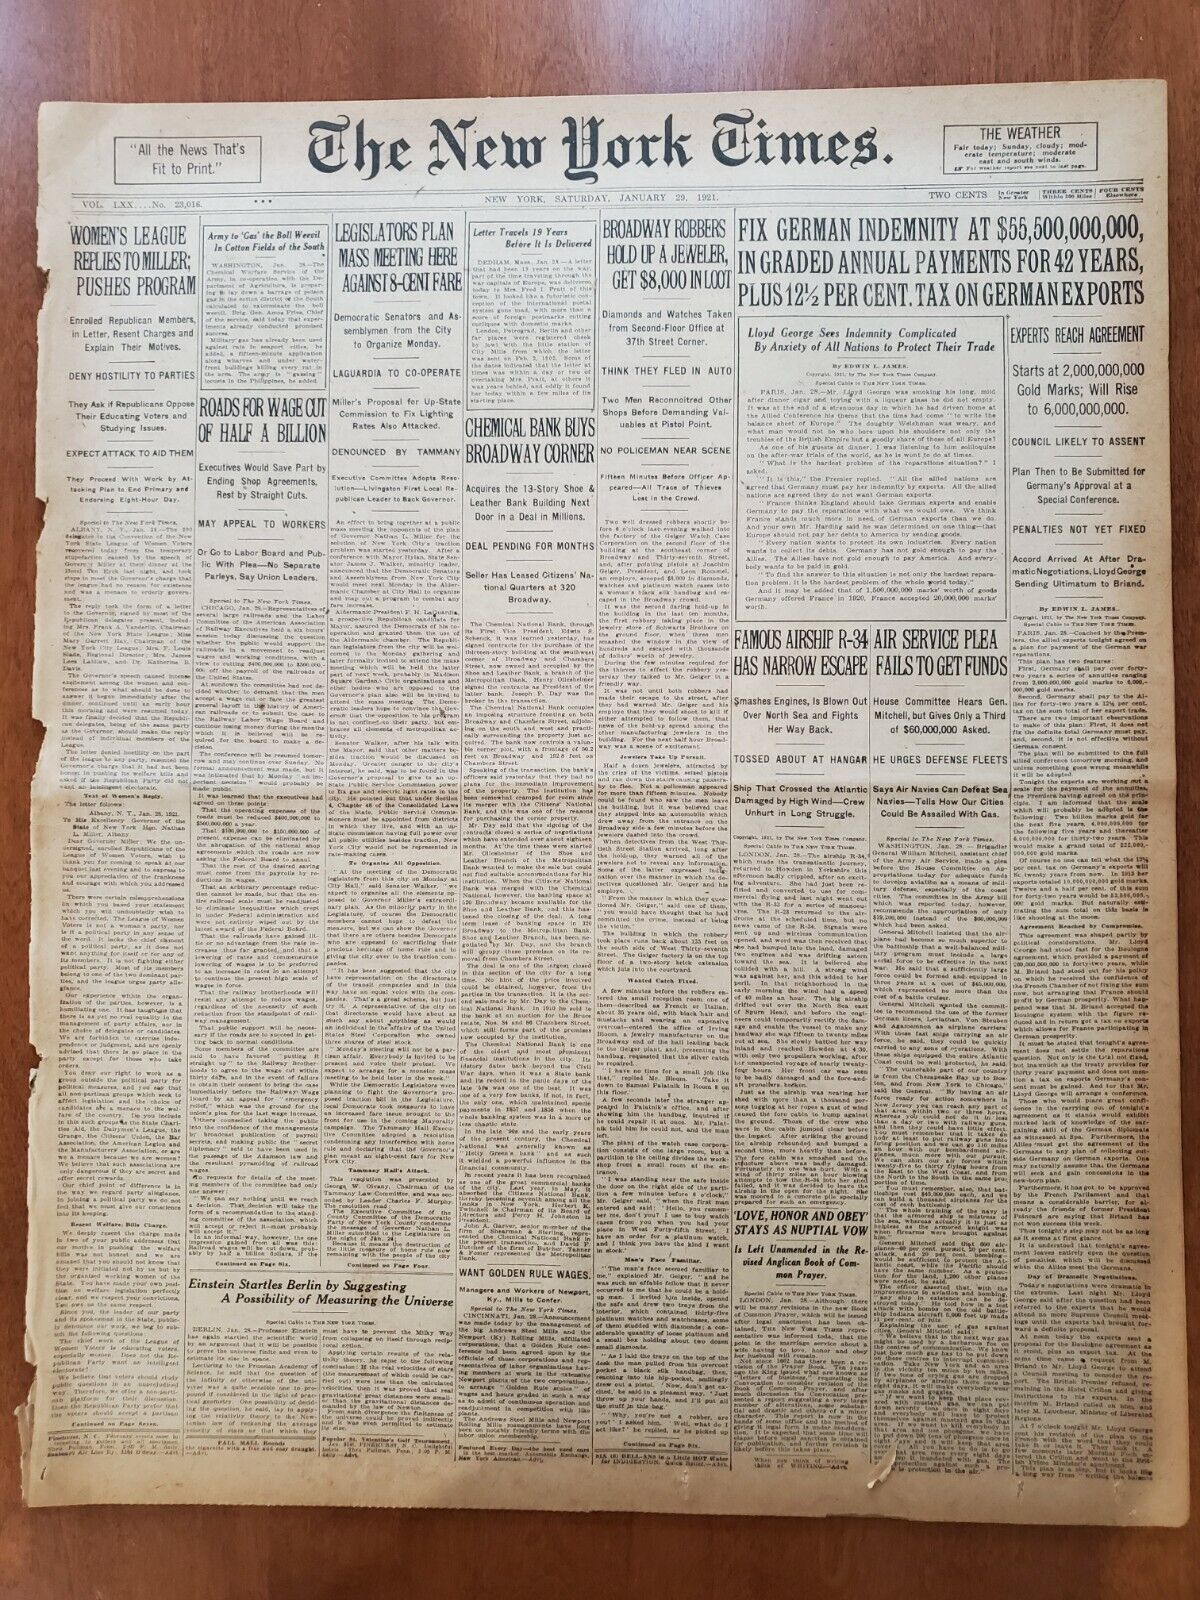 1921 JANUARY 29 NEW YORK TIMES - CHEMICAL BANK BUYS BROADWAY CORNER - NT 8098